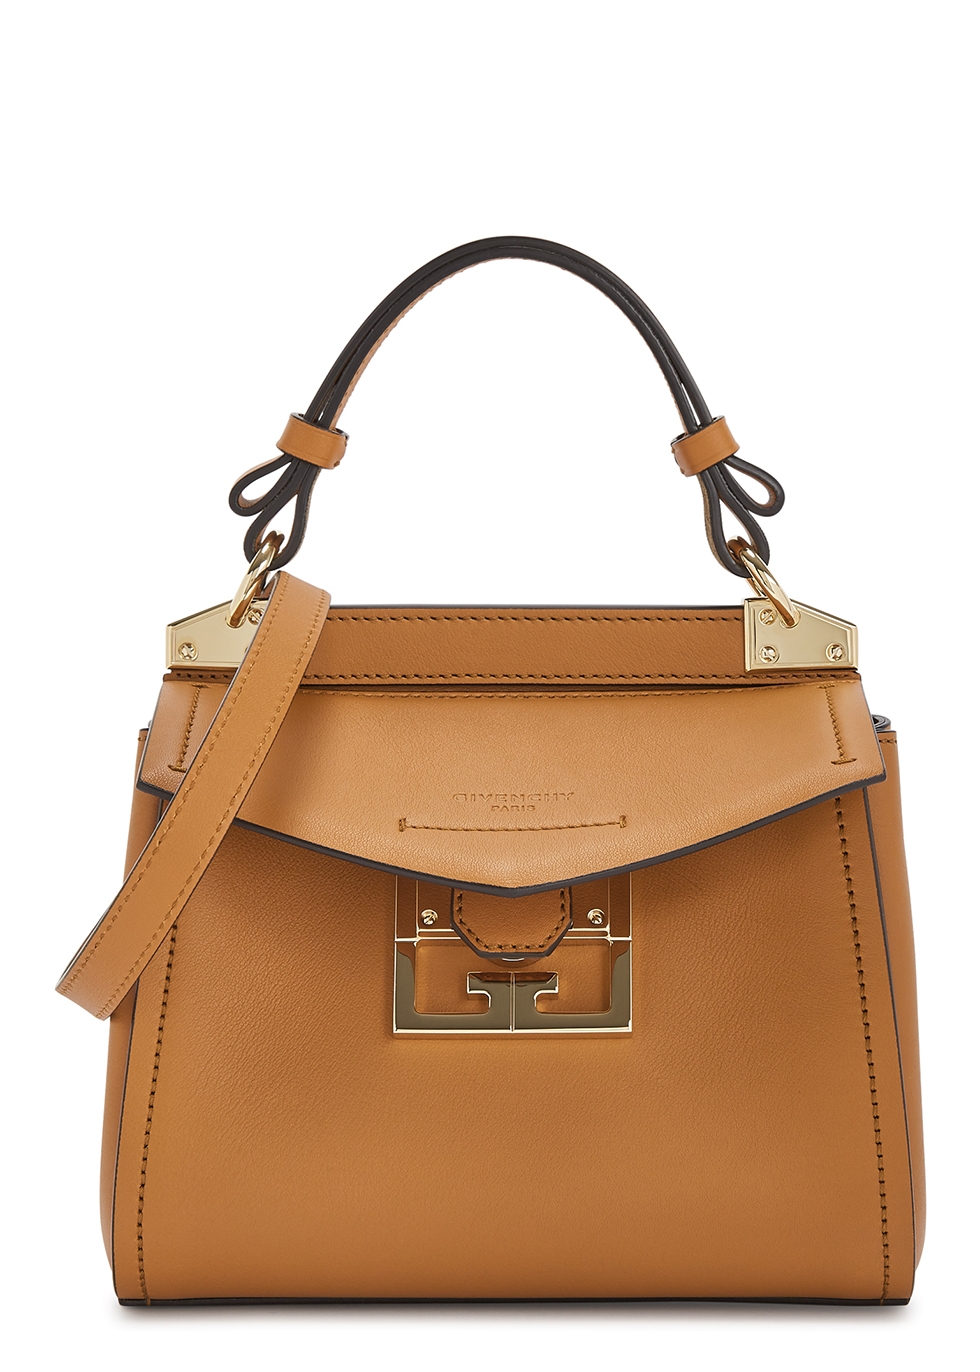 Givenchy Mystic mini brown leather top handle bag - Harvey Nichols